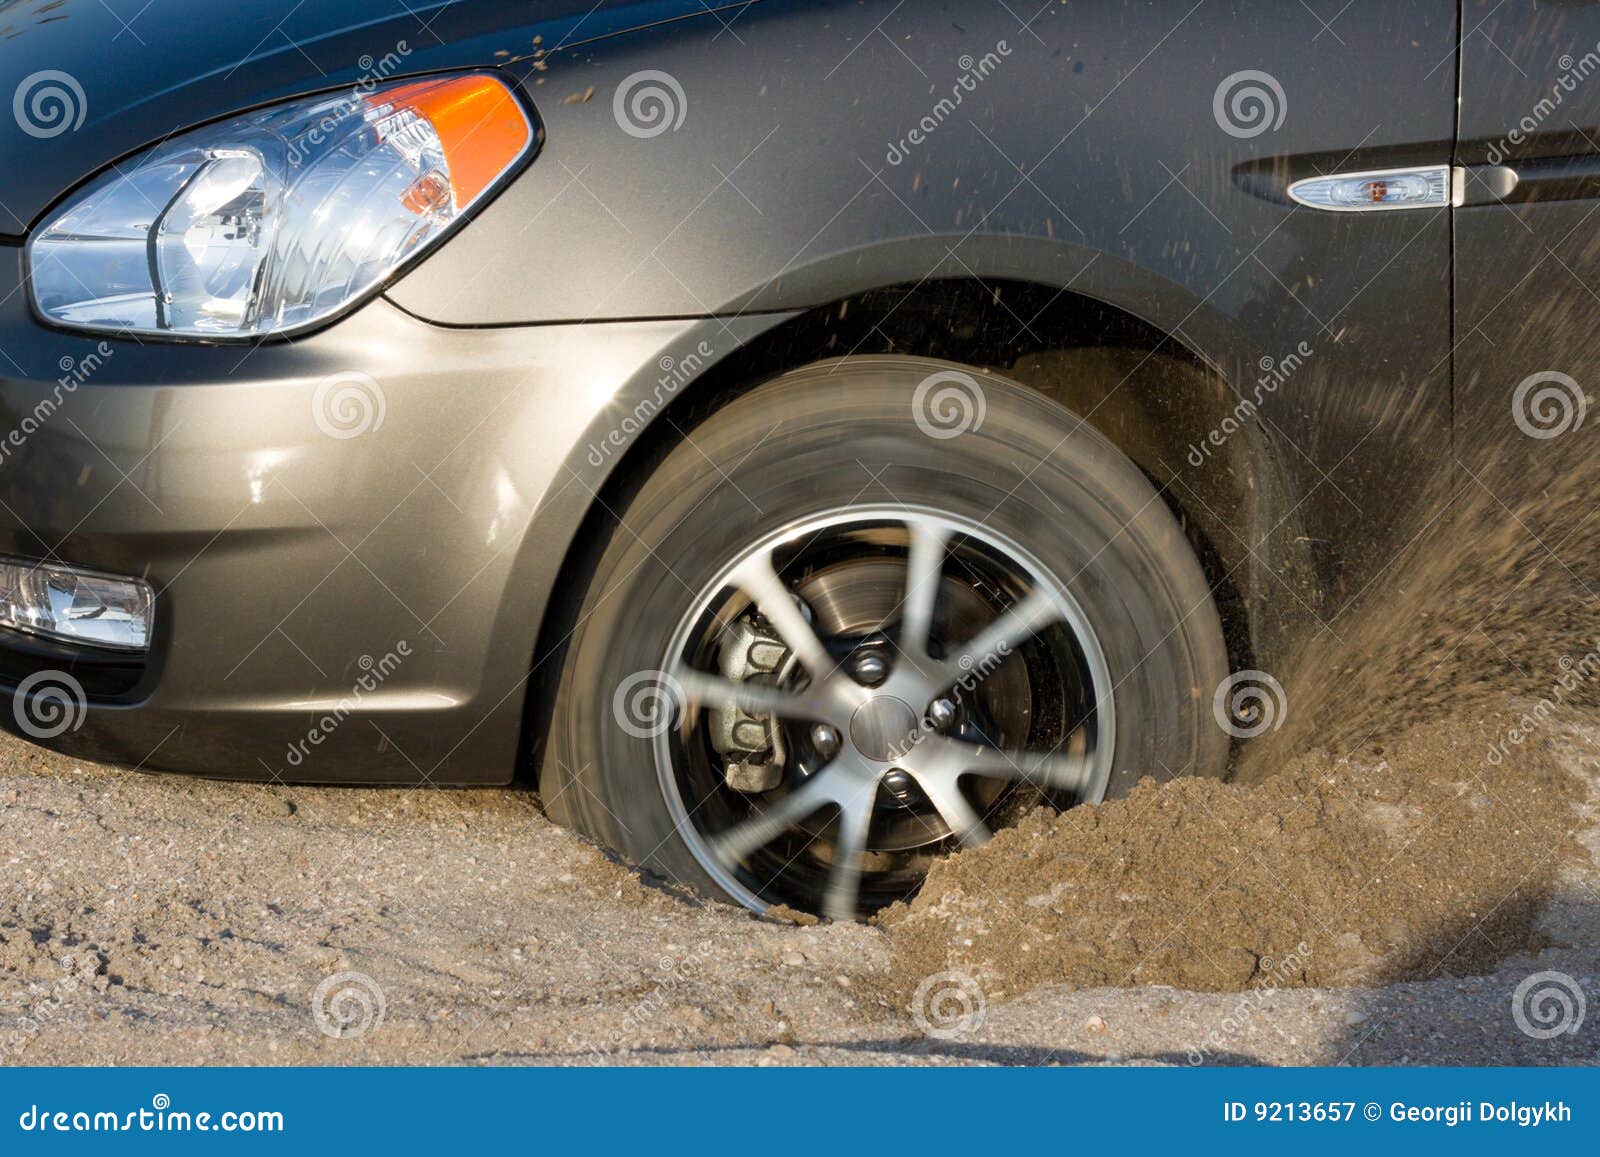 car stuck in sand